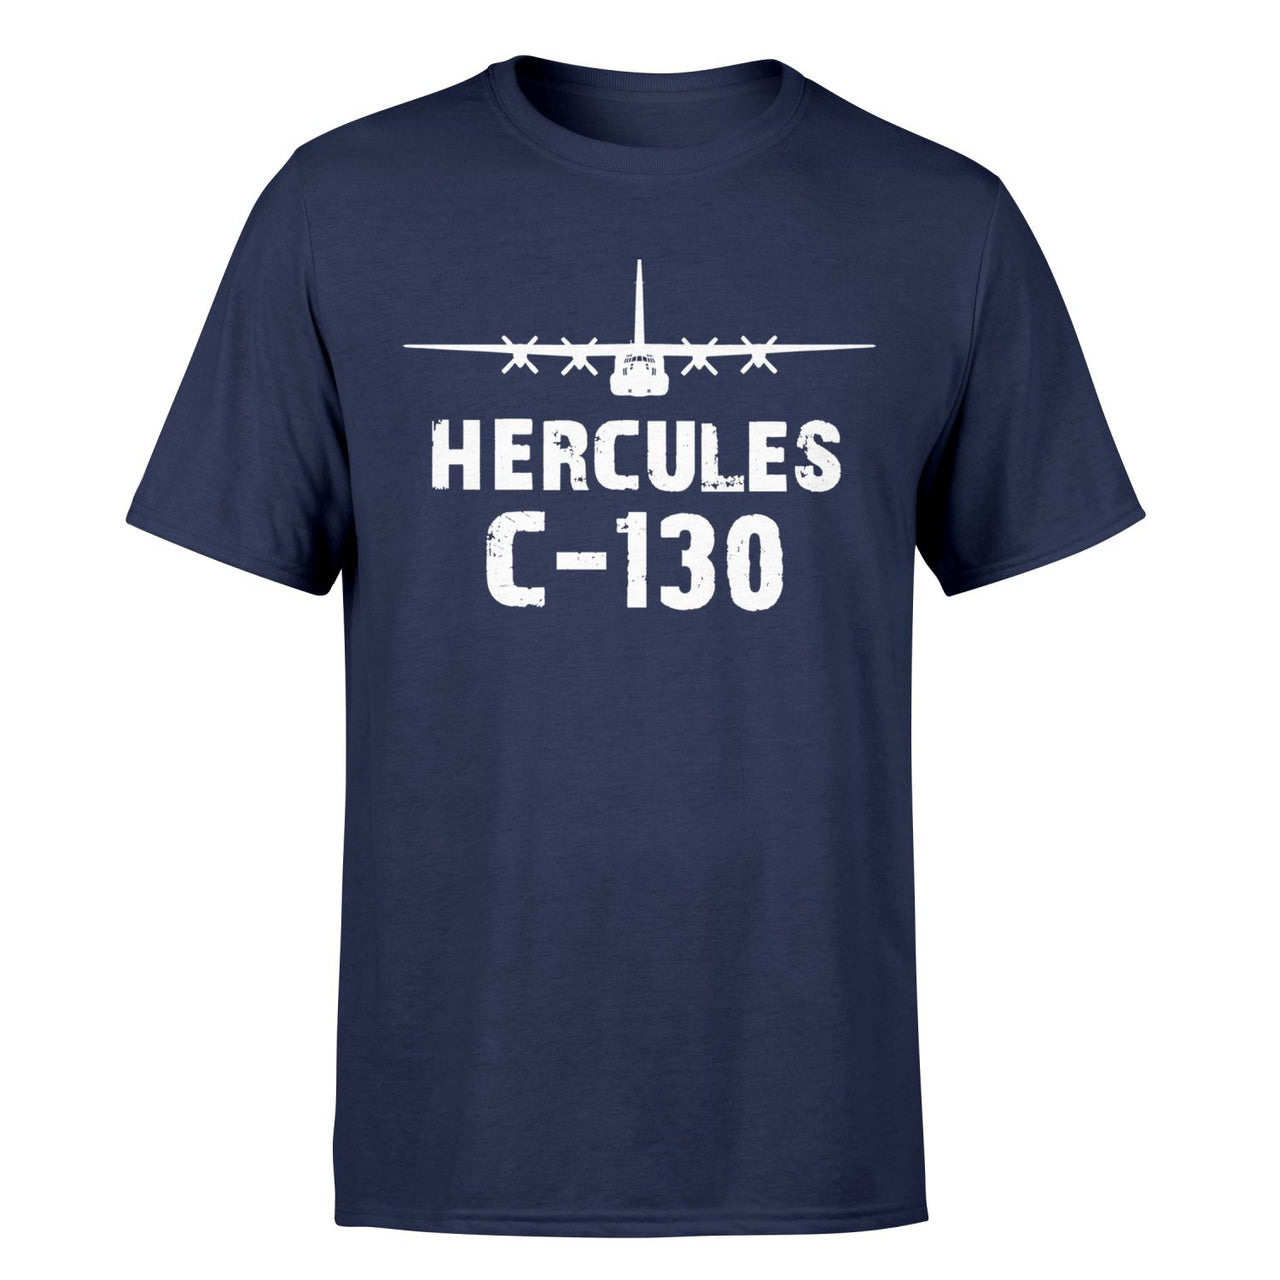 Hercules C-130 & Plane Designed T-Shirts